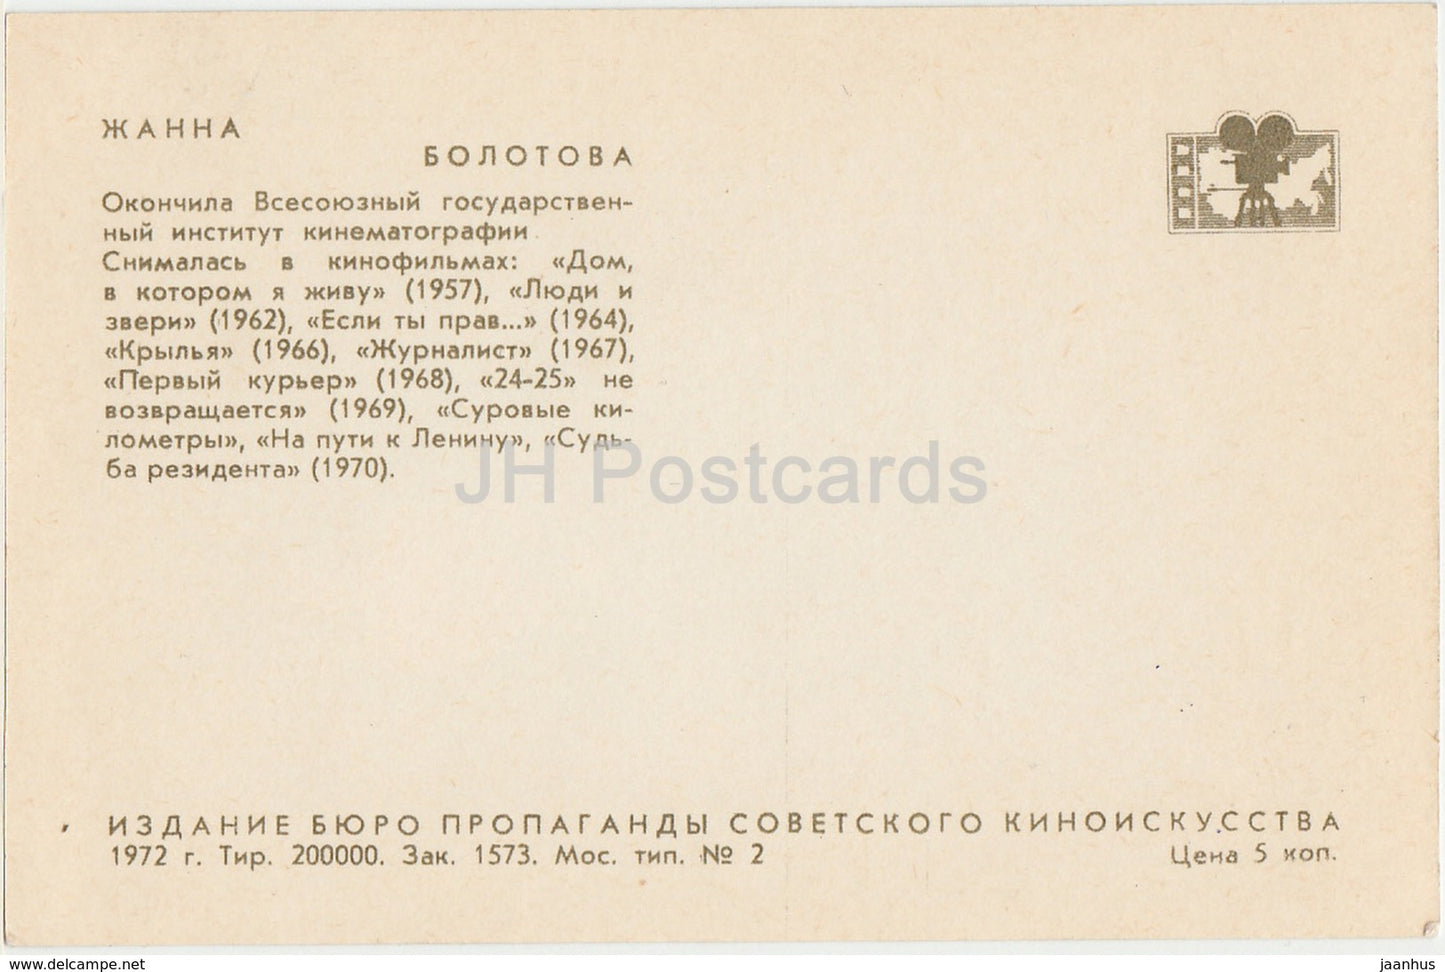 Zhanna Bolotova - movie actress - theatre - 1972 - Russia USSR - unused - JH Postcards